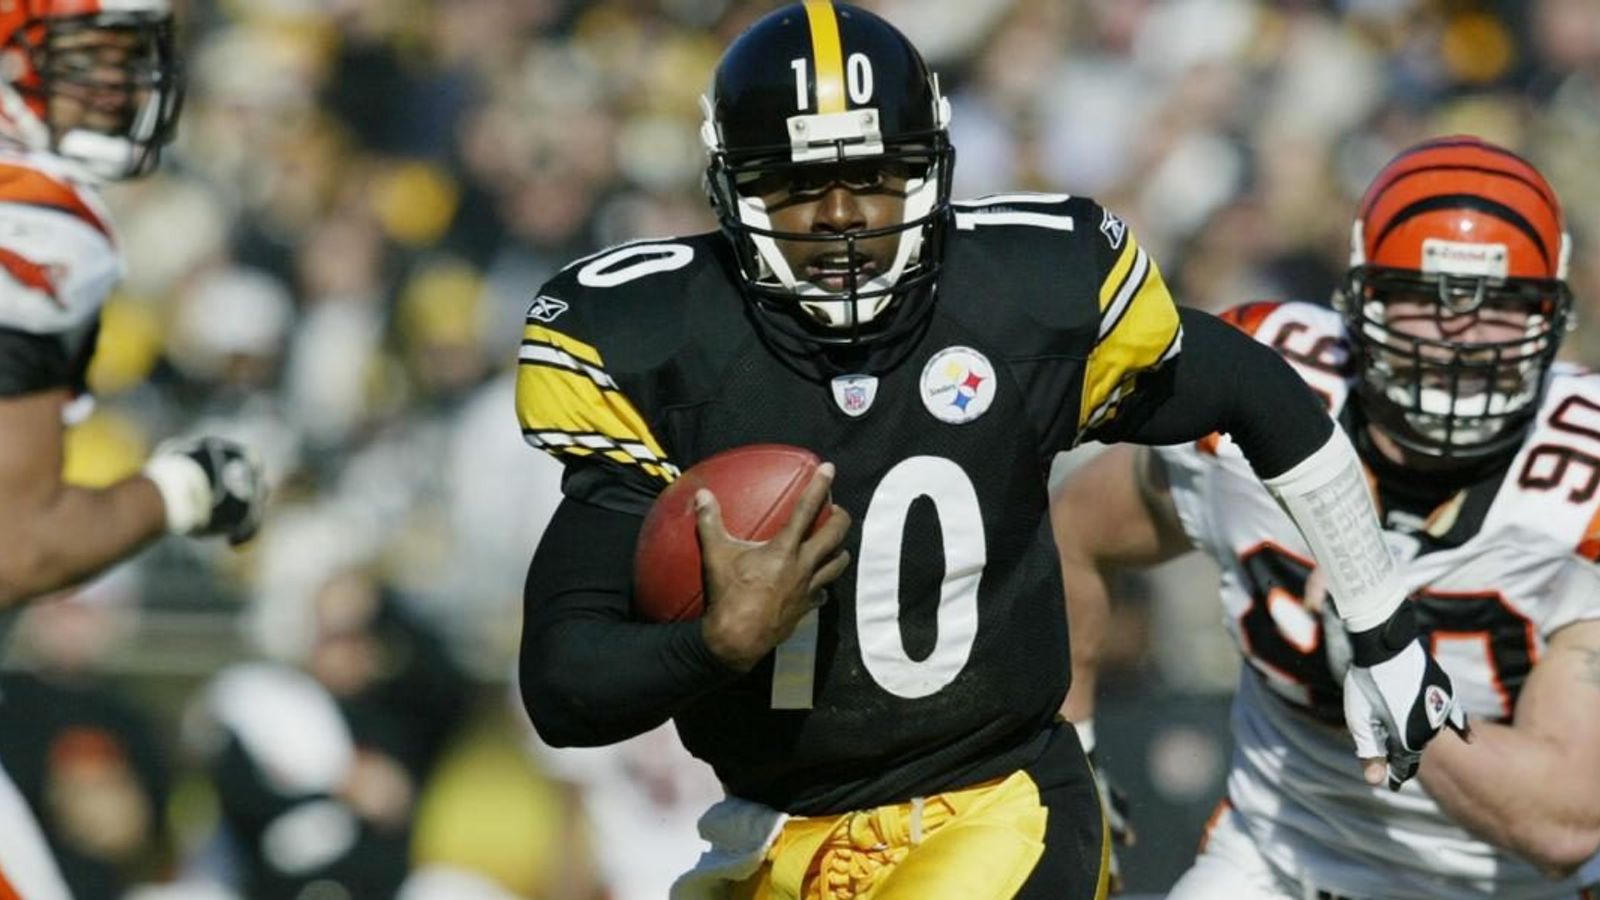 Ahead of his Time: Former Steelers Quarterback Kordell Stewart